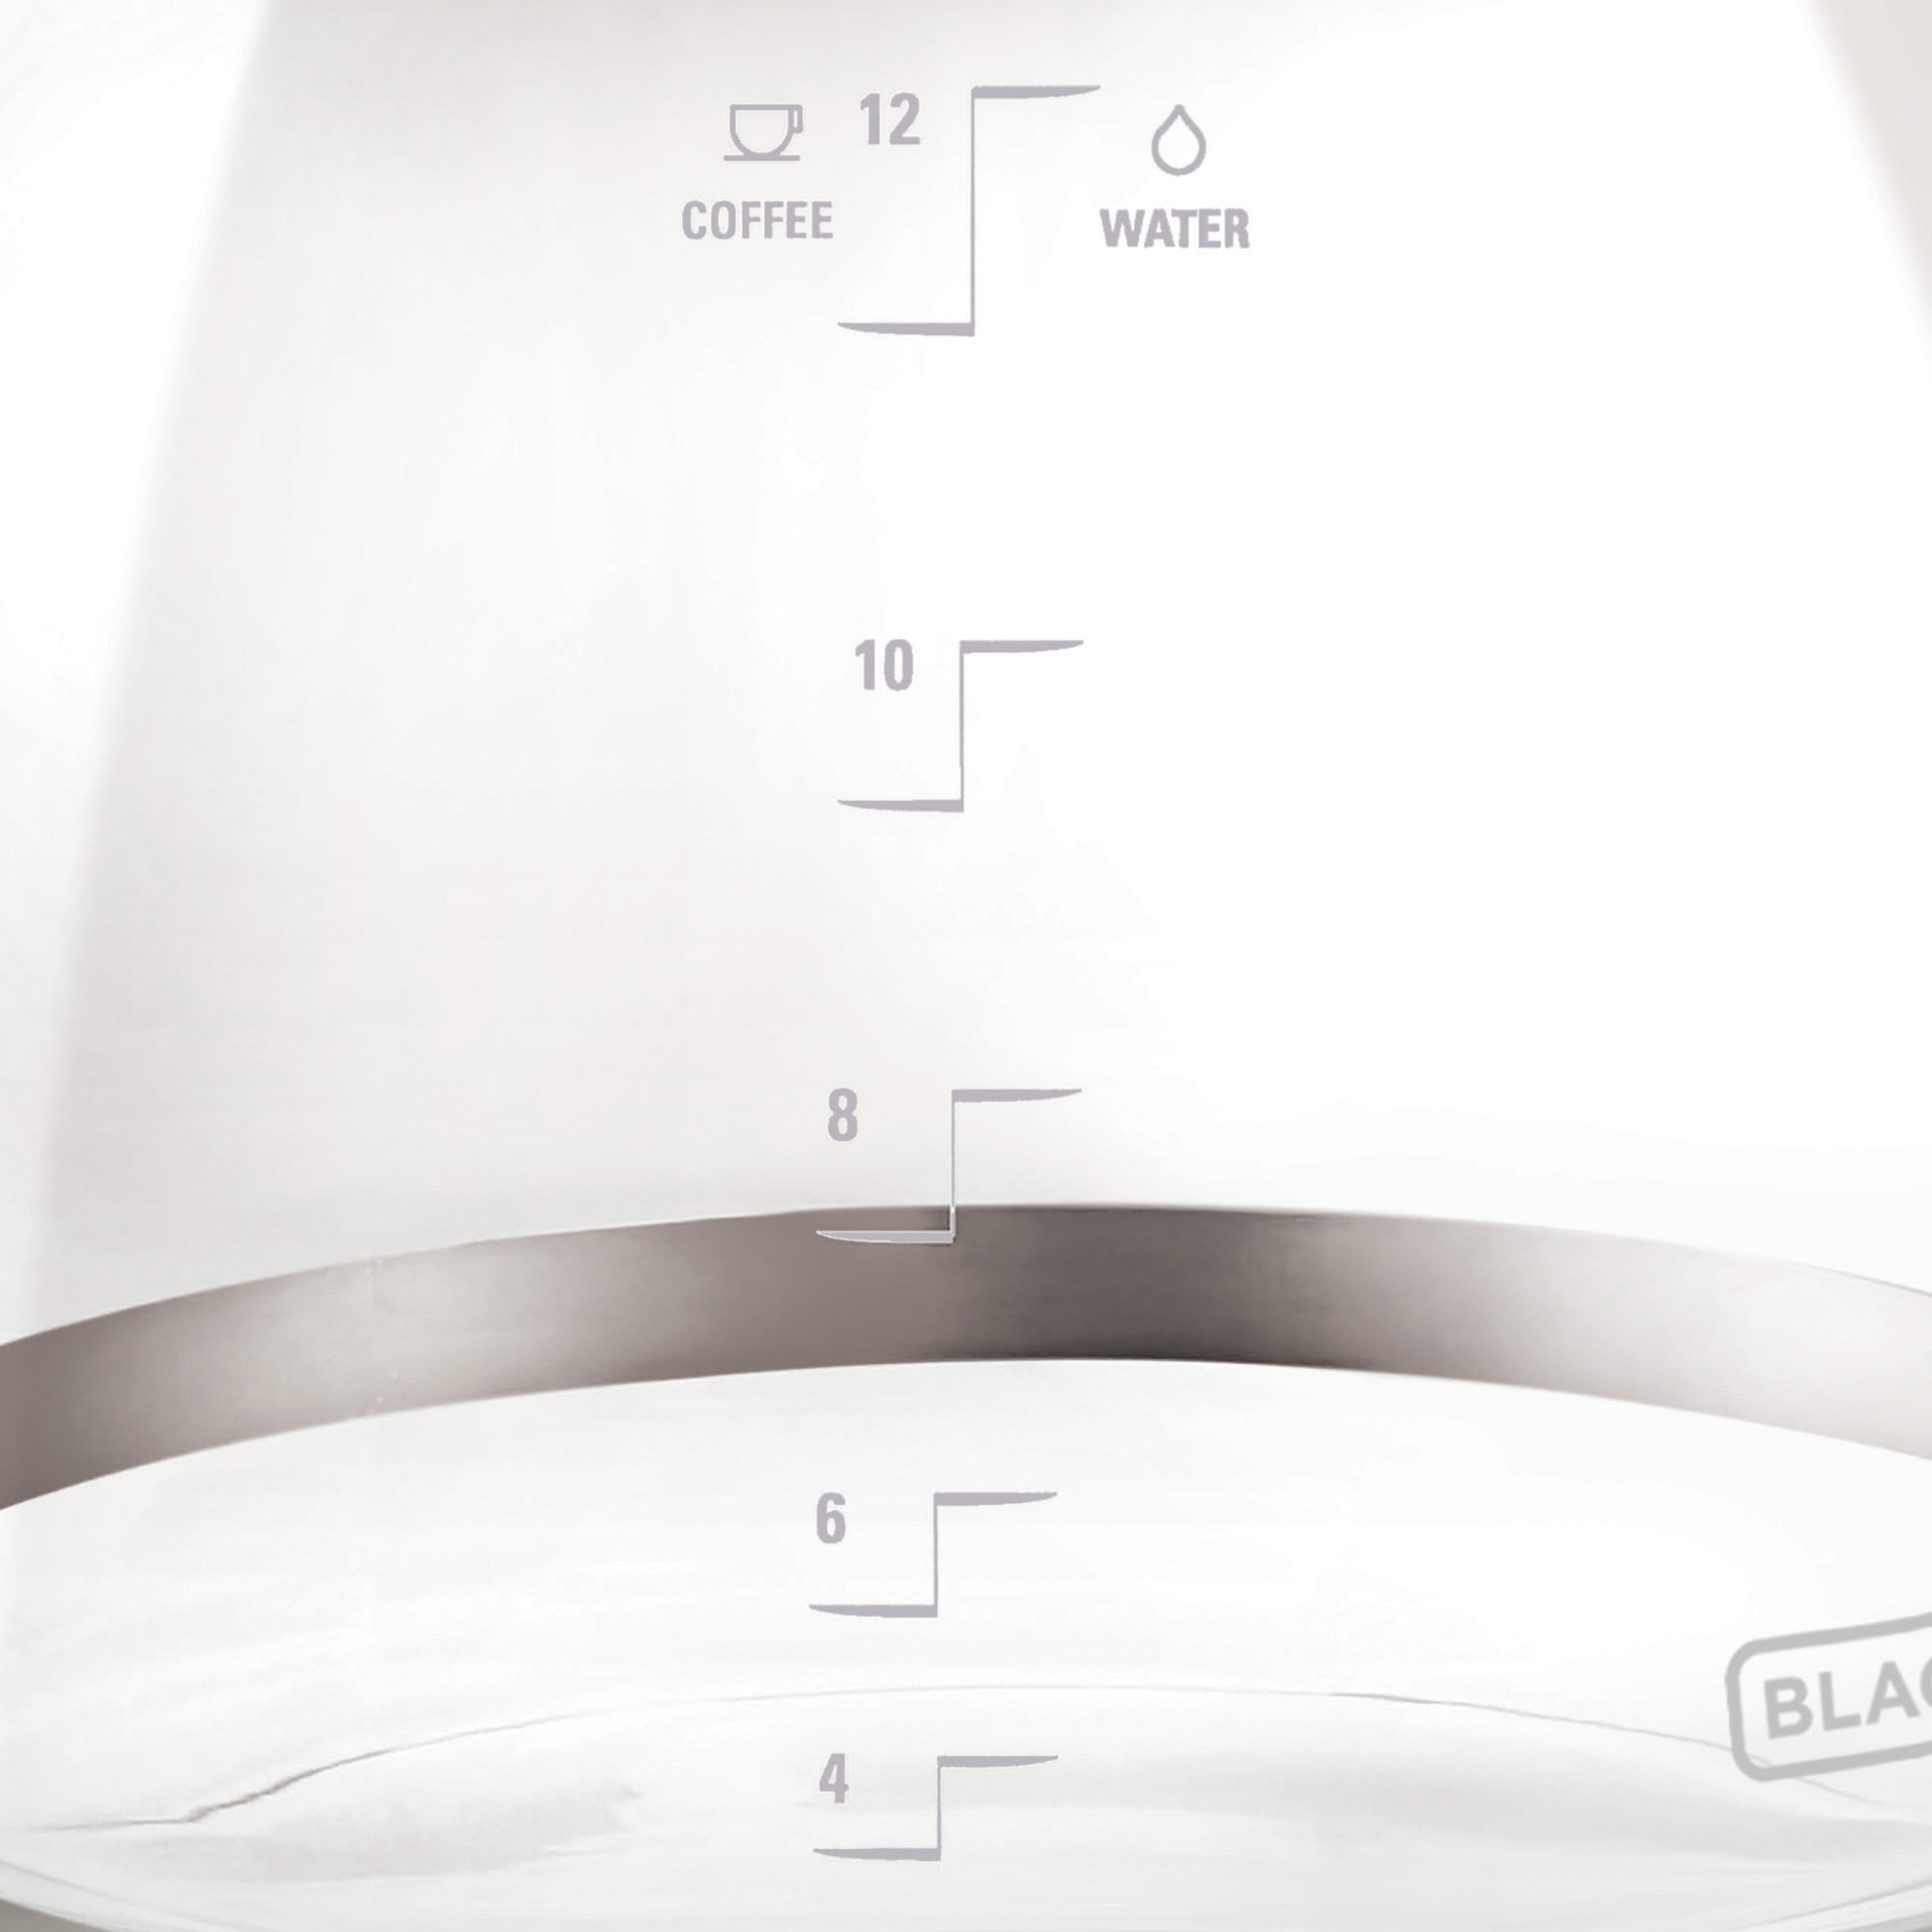 Black & Decker Coffee Pot 12-Cup Replacement Carafe Black GC3000B